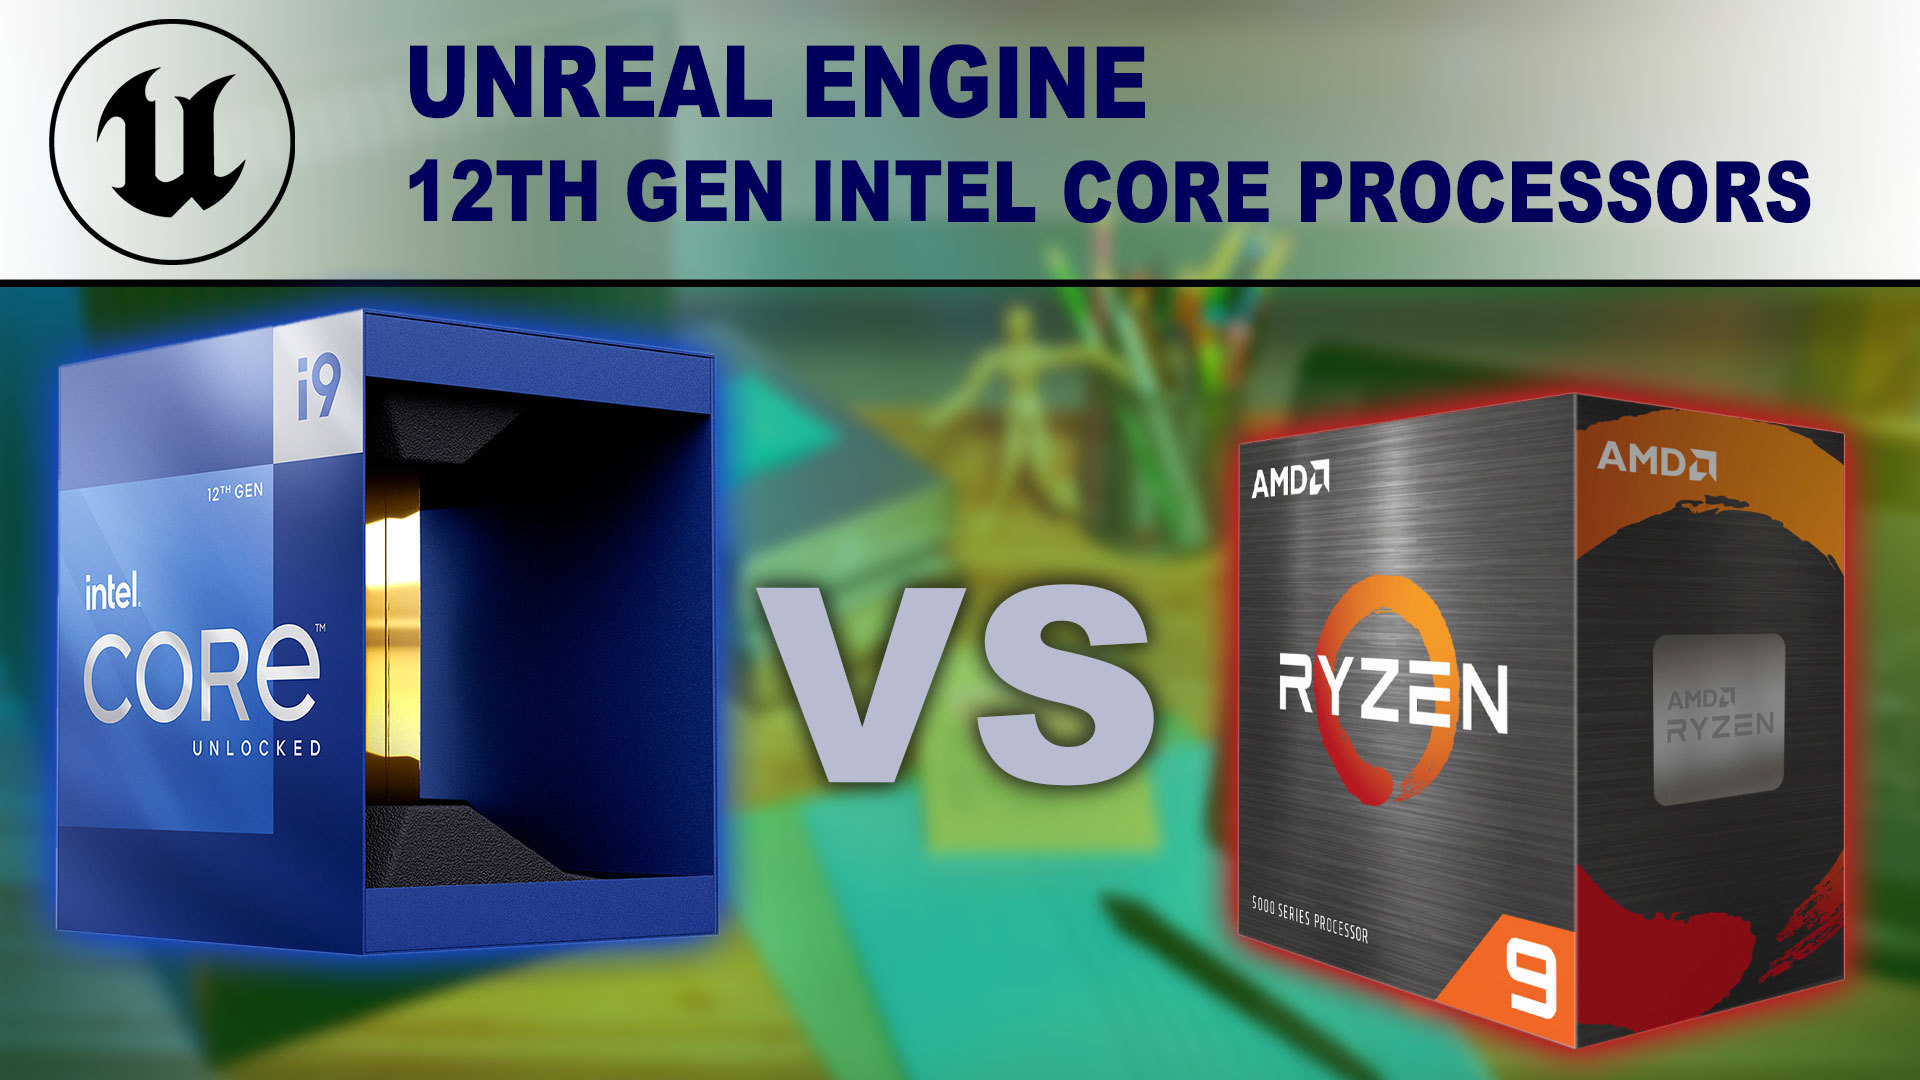 12th Gen Intel Core Processors for Unreal Engine